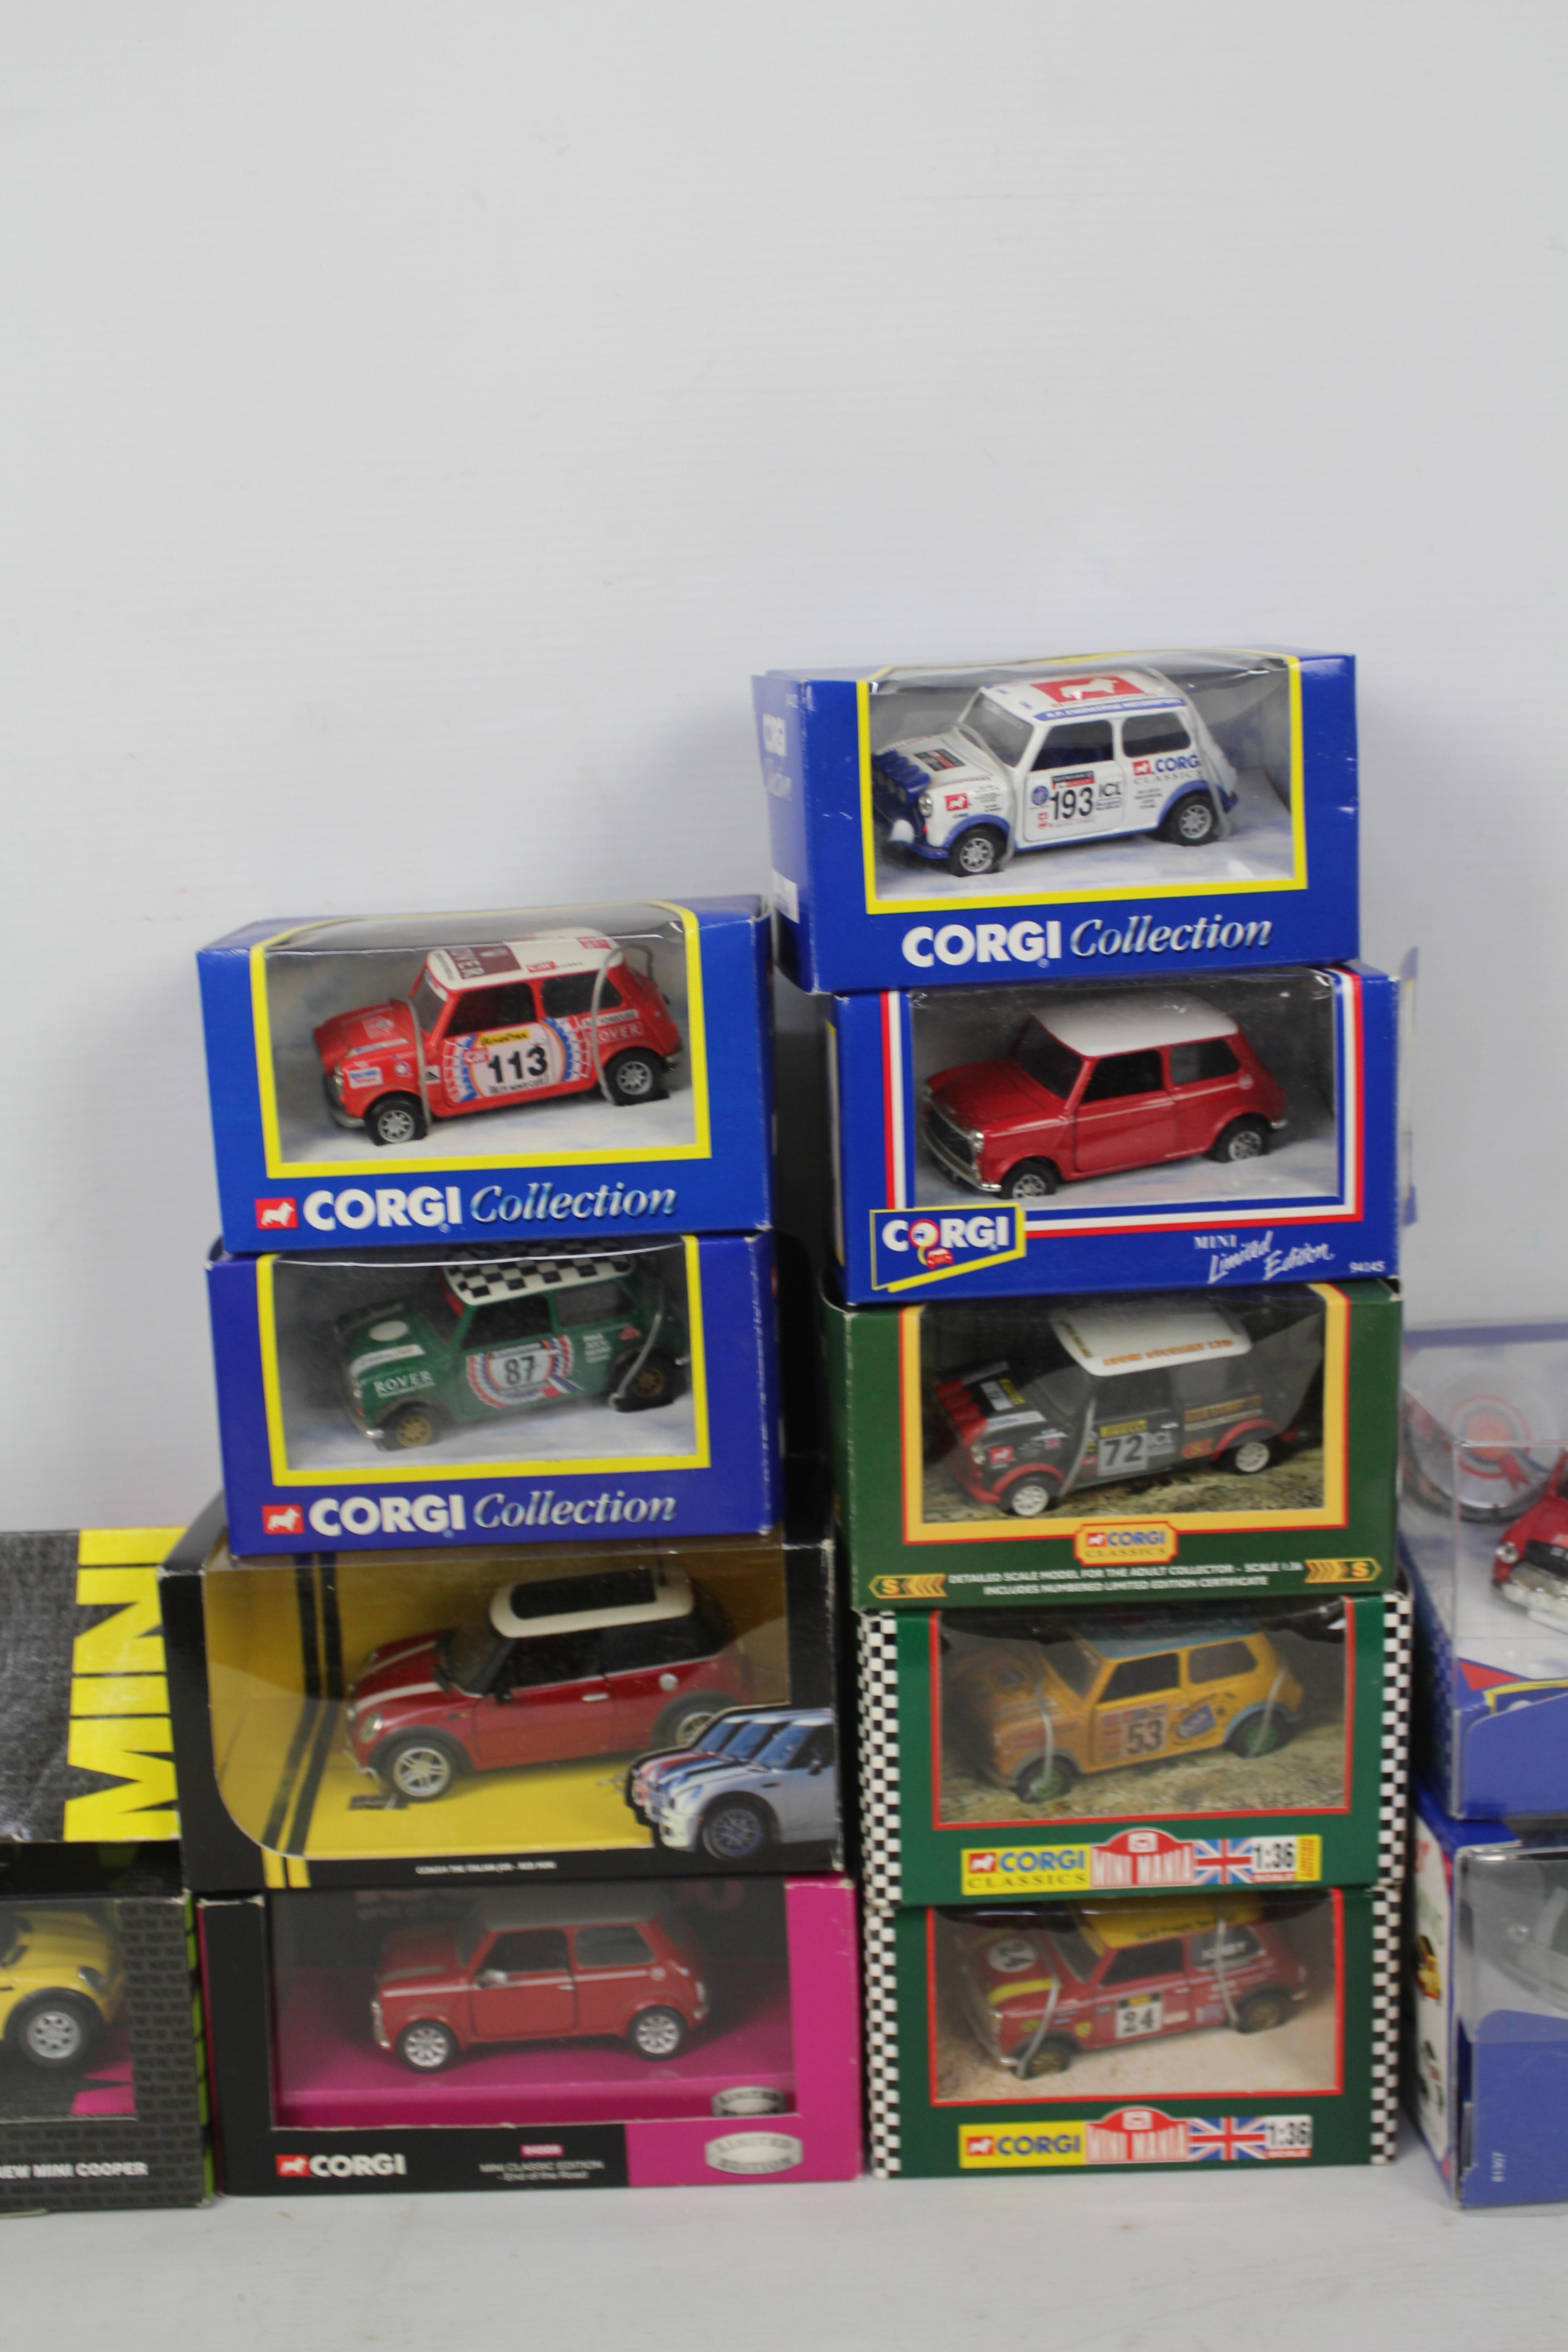 Corgi - Corgi Classics - A boxed collection of 13 1:43 scale diecast model Minis from various Corgi - Image 4 of 4